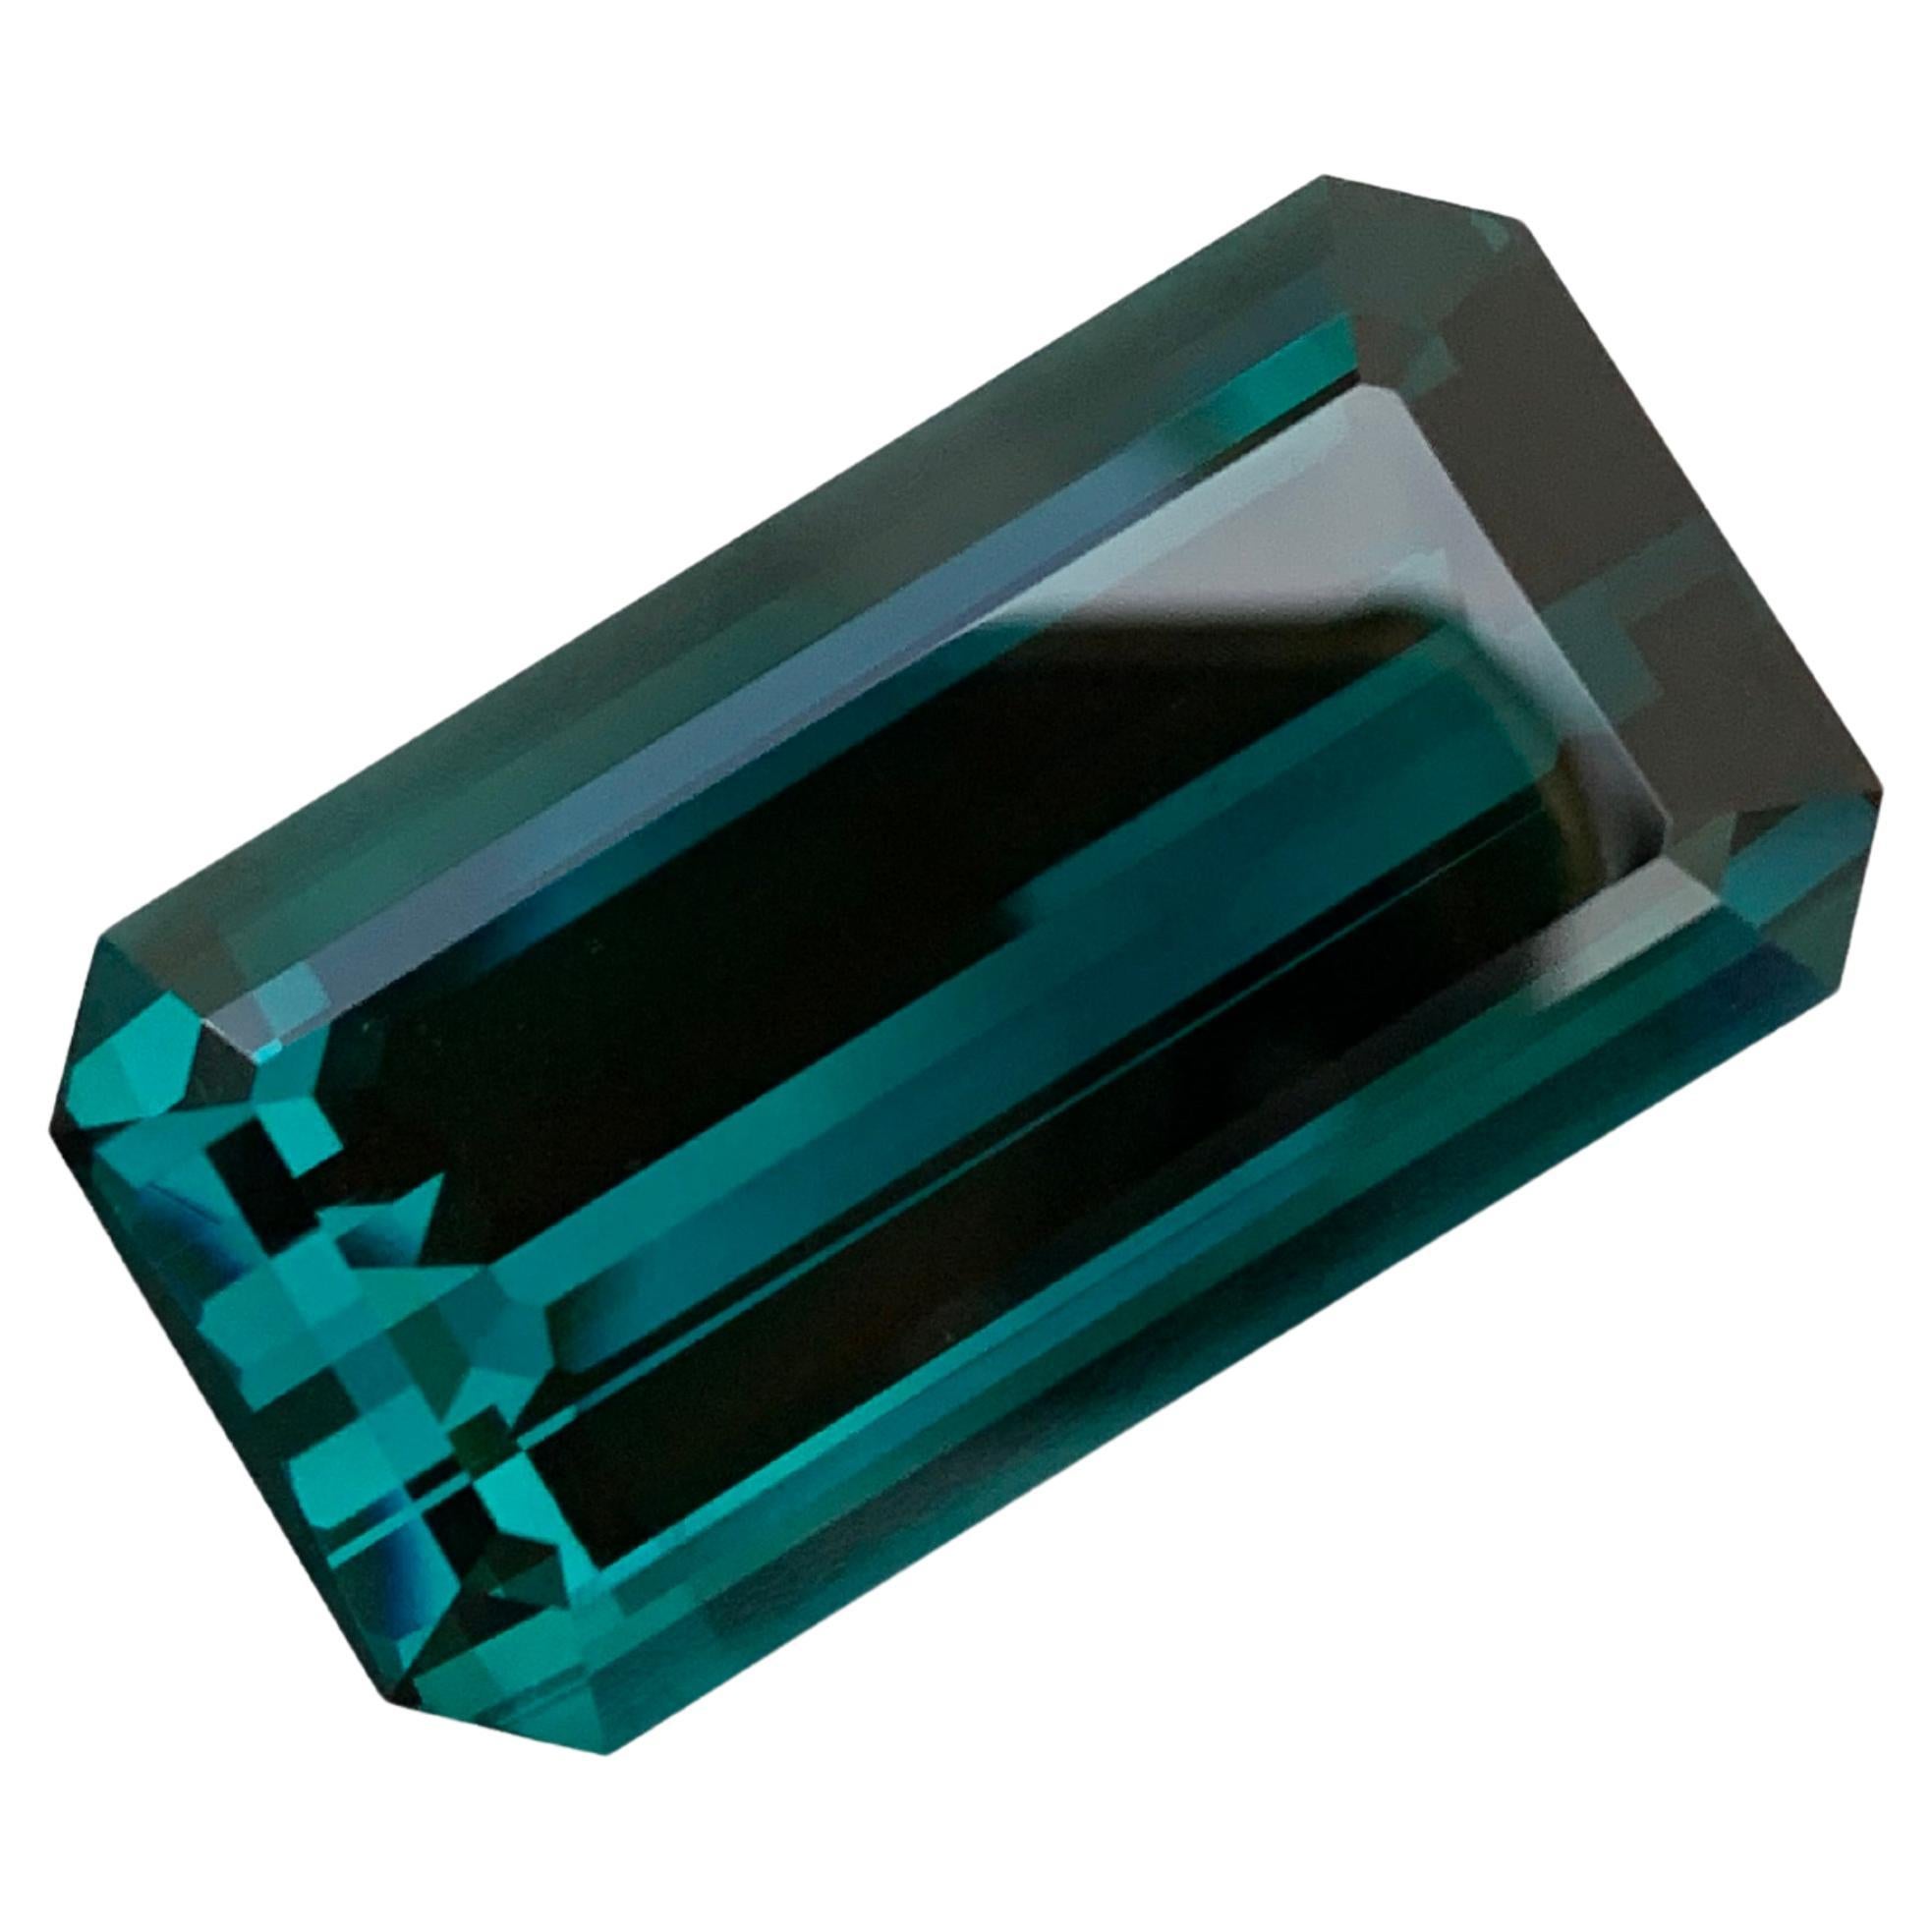 Gigantic 77.50 Carat Natural Loose Indicolite Tourmaline Emerald Shape Gemstone 